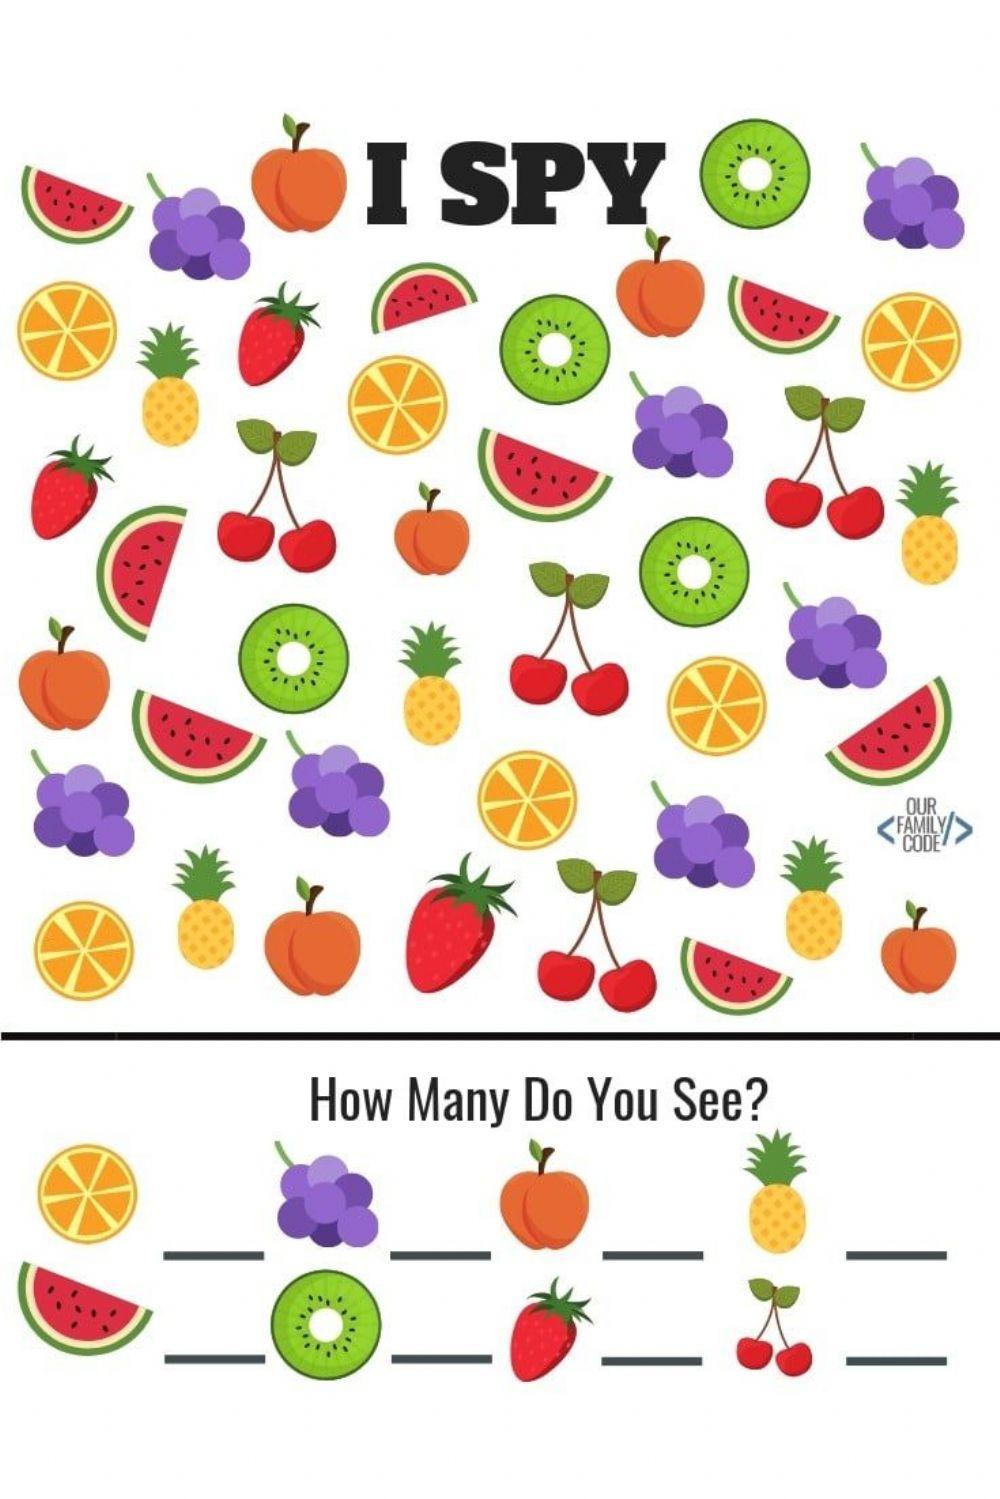 I Spy Vegetables and Fruits